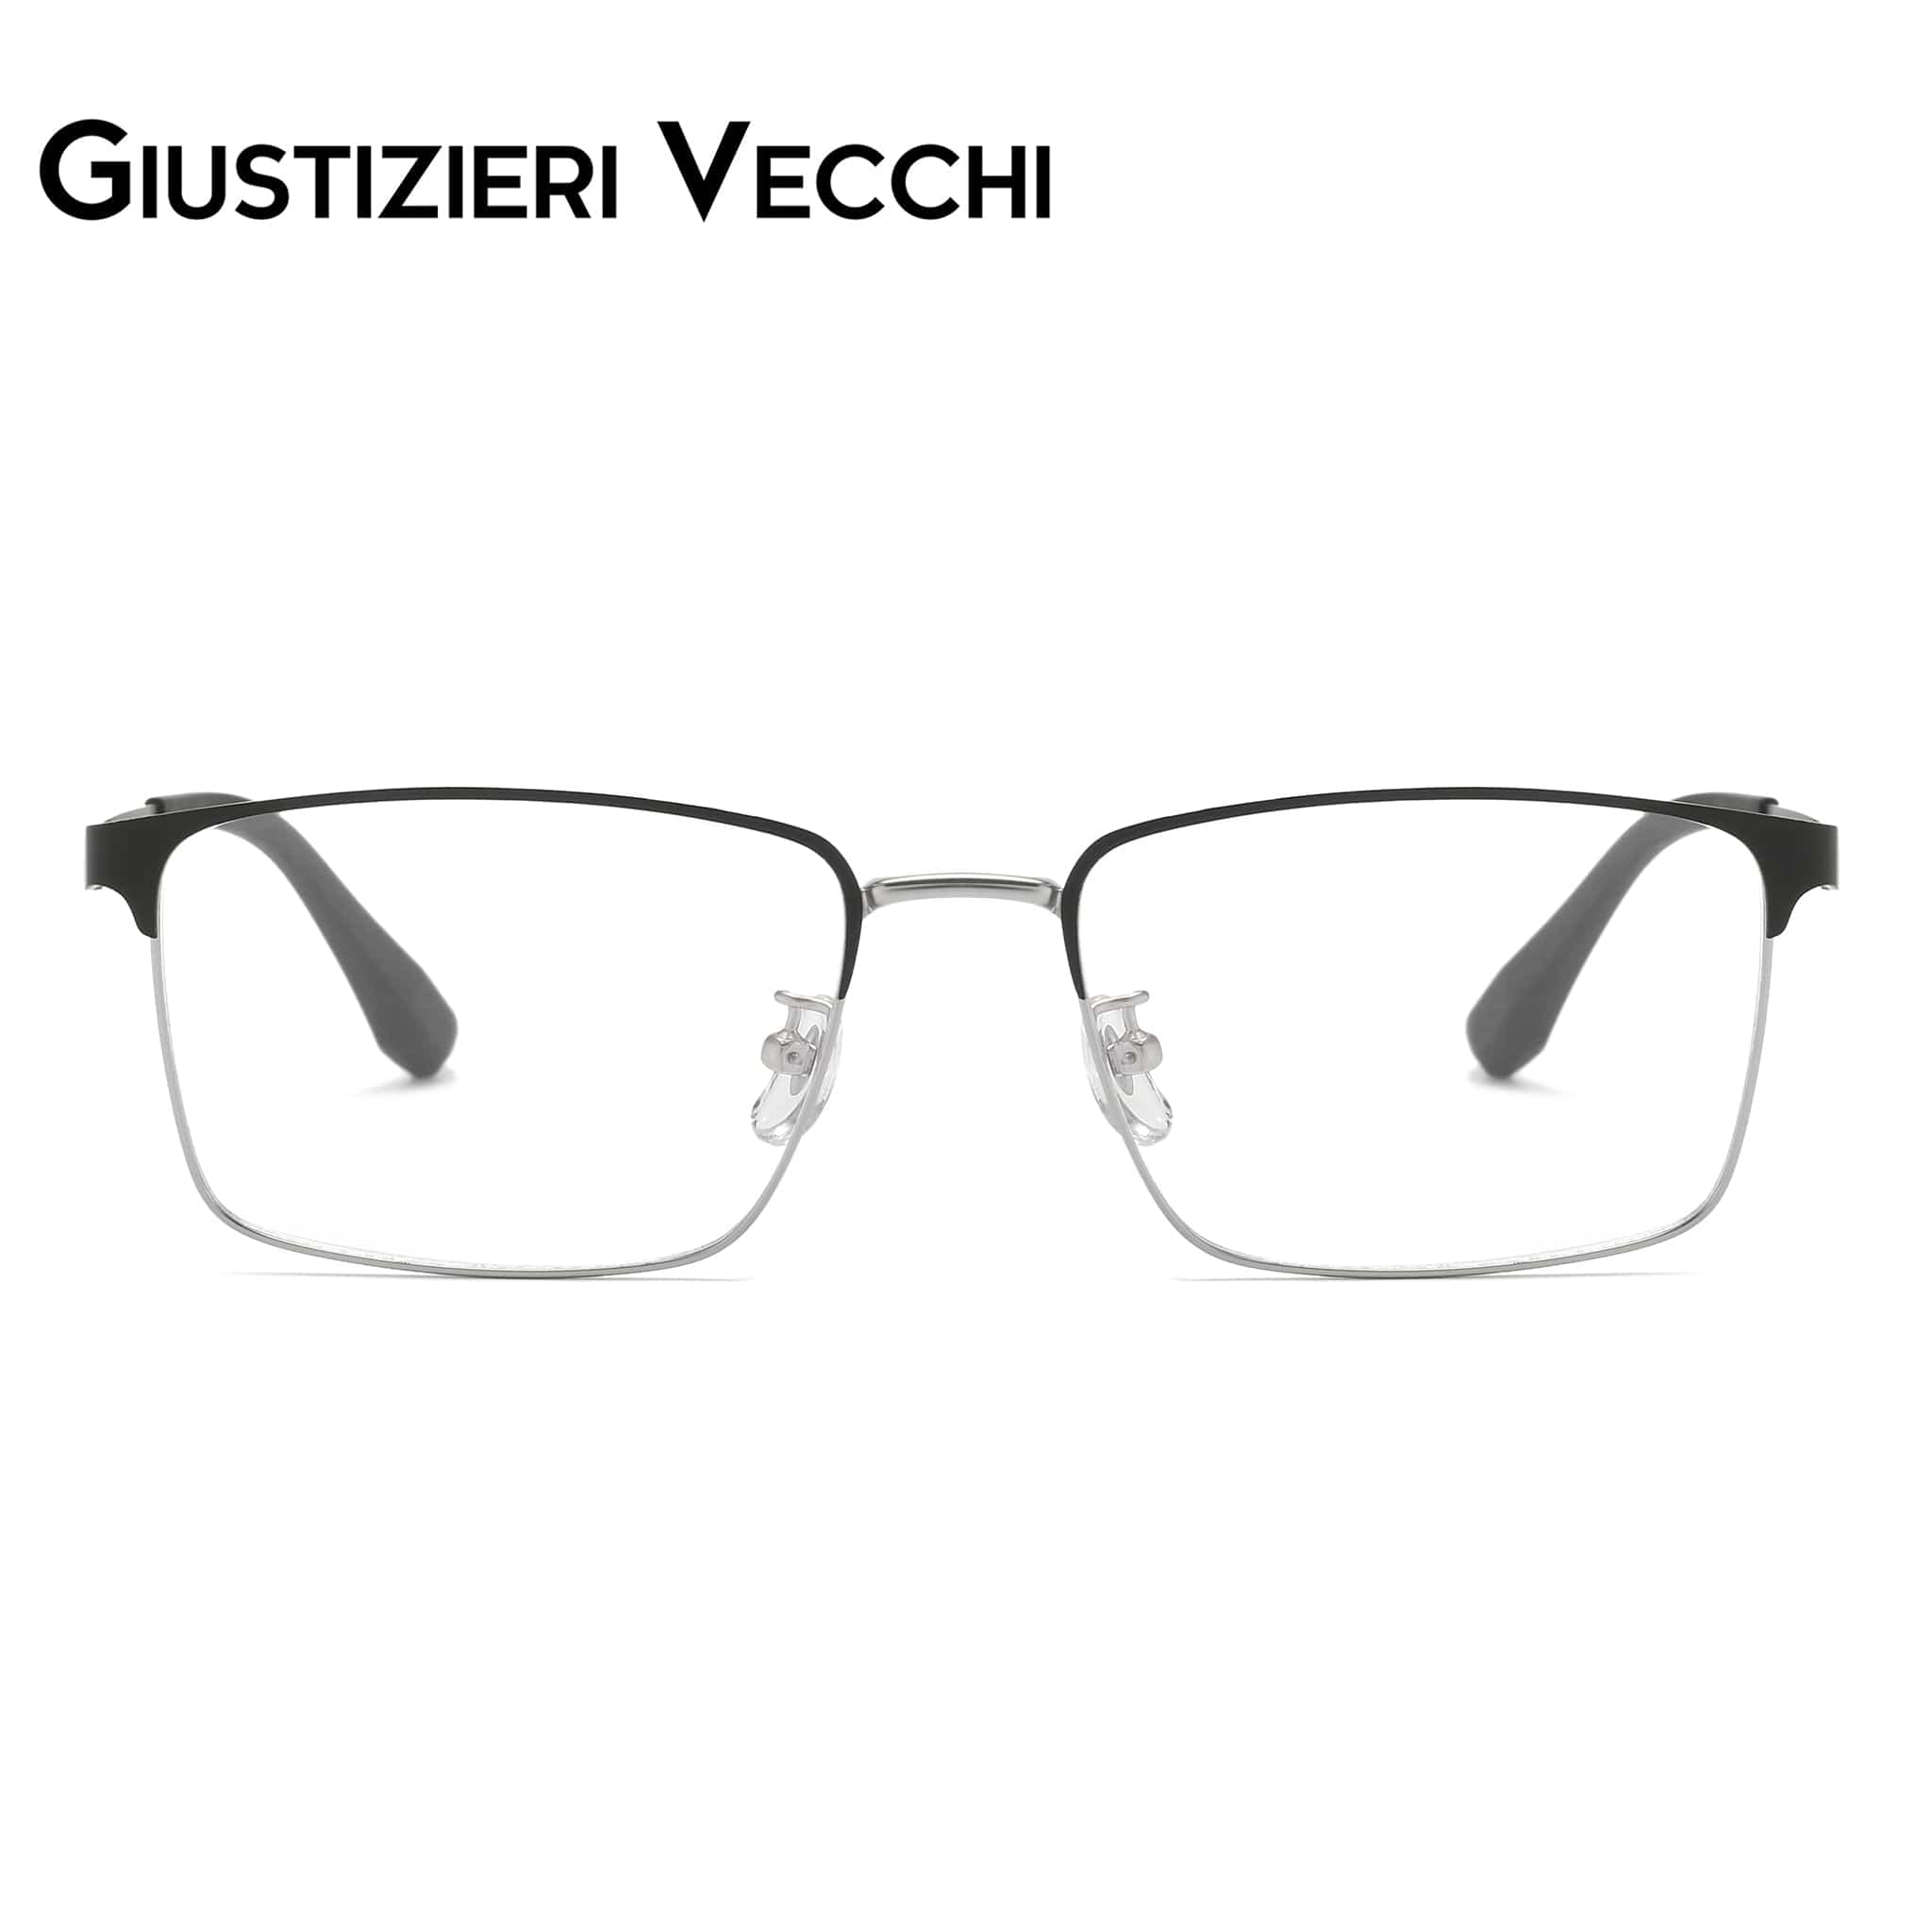 GIUSTIZIERI VECCHI Eyeglasses Large / Black with Silver SkyRider Duo